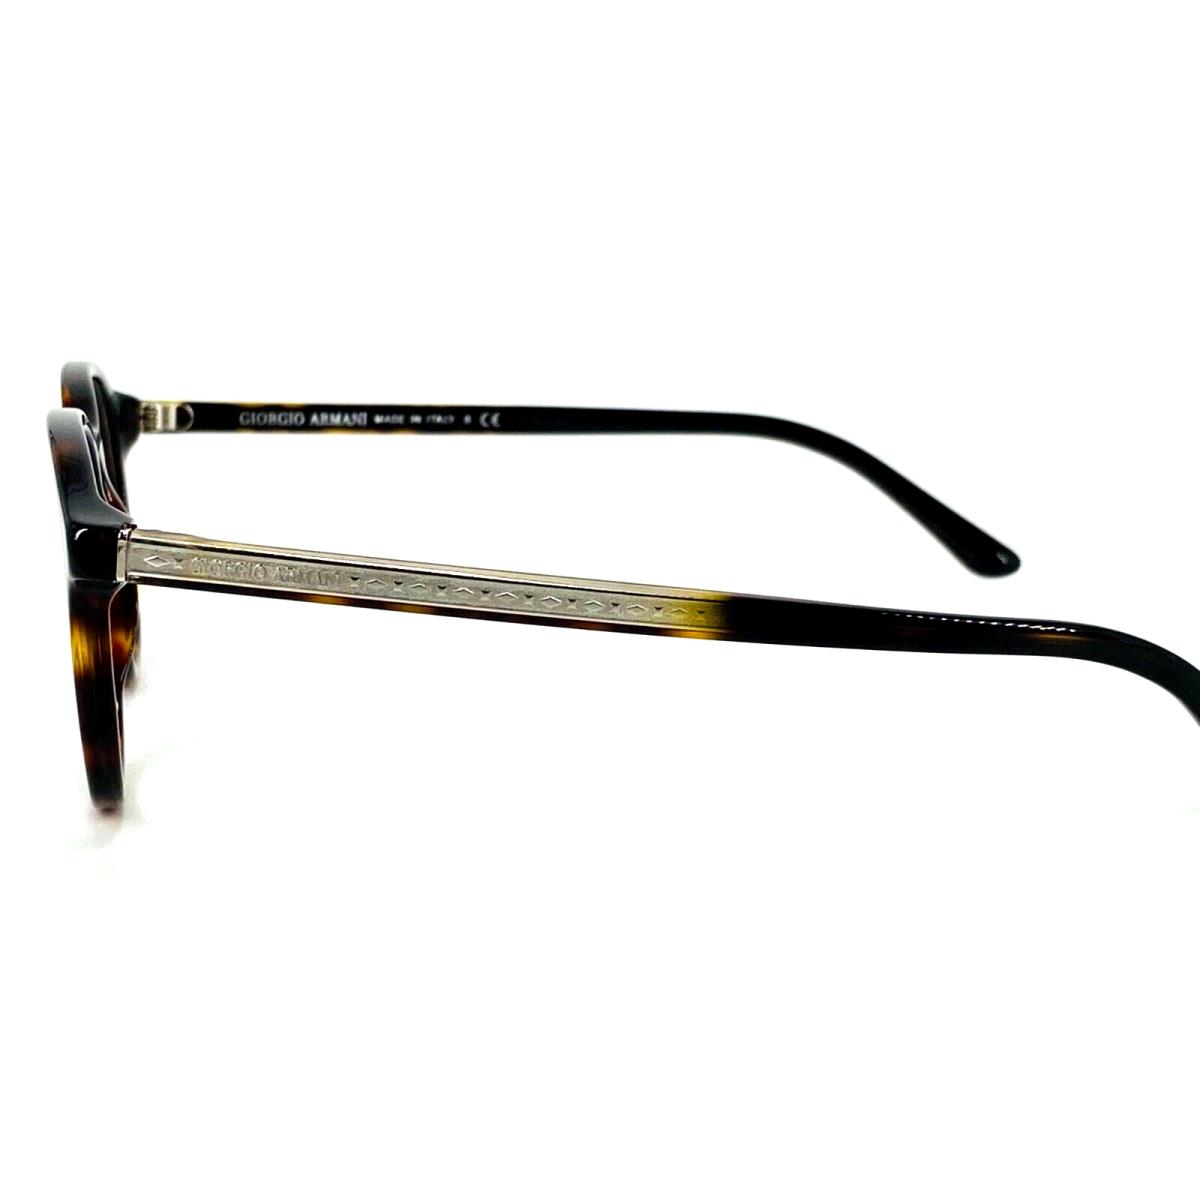 Giorgio Armani eyeglasses  - 5026 Dark Havana , Brown Frame 1